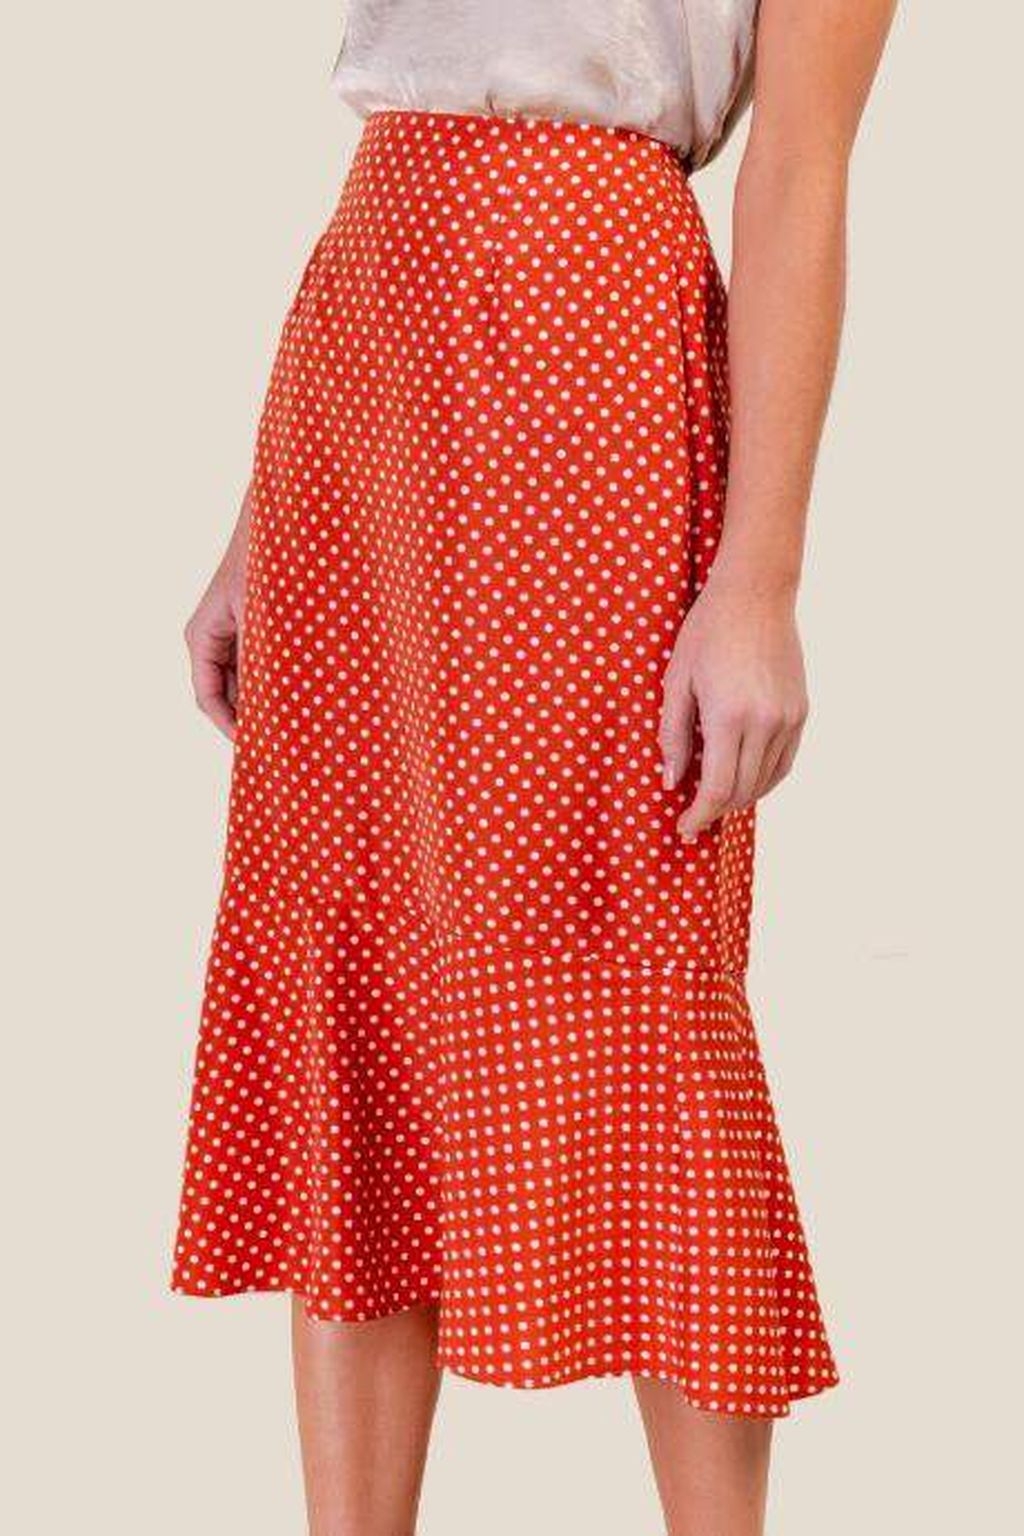 45 Delicate Polka Dot Maxi Skirt Ideas For Reunion - ADDICFASHION